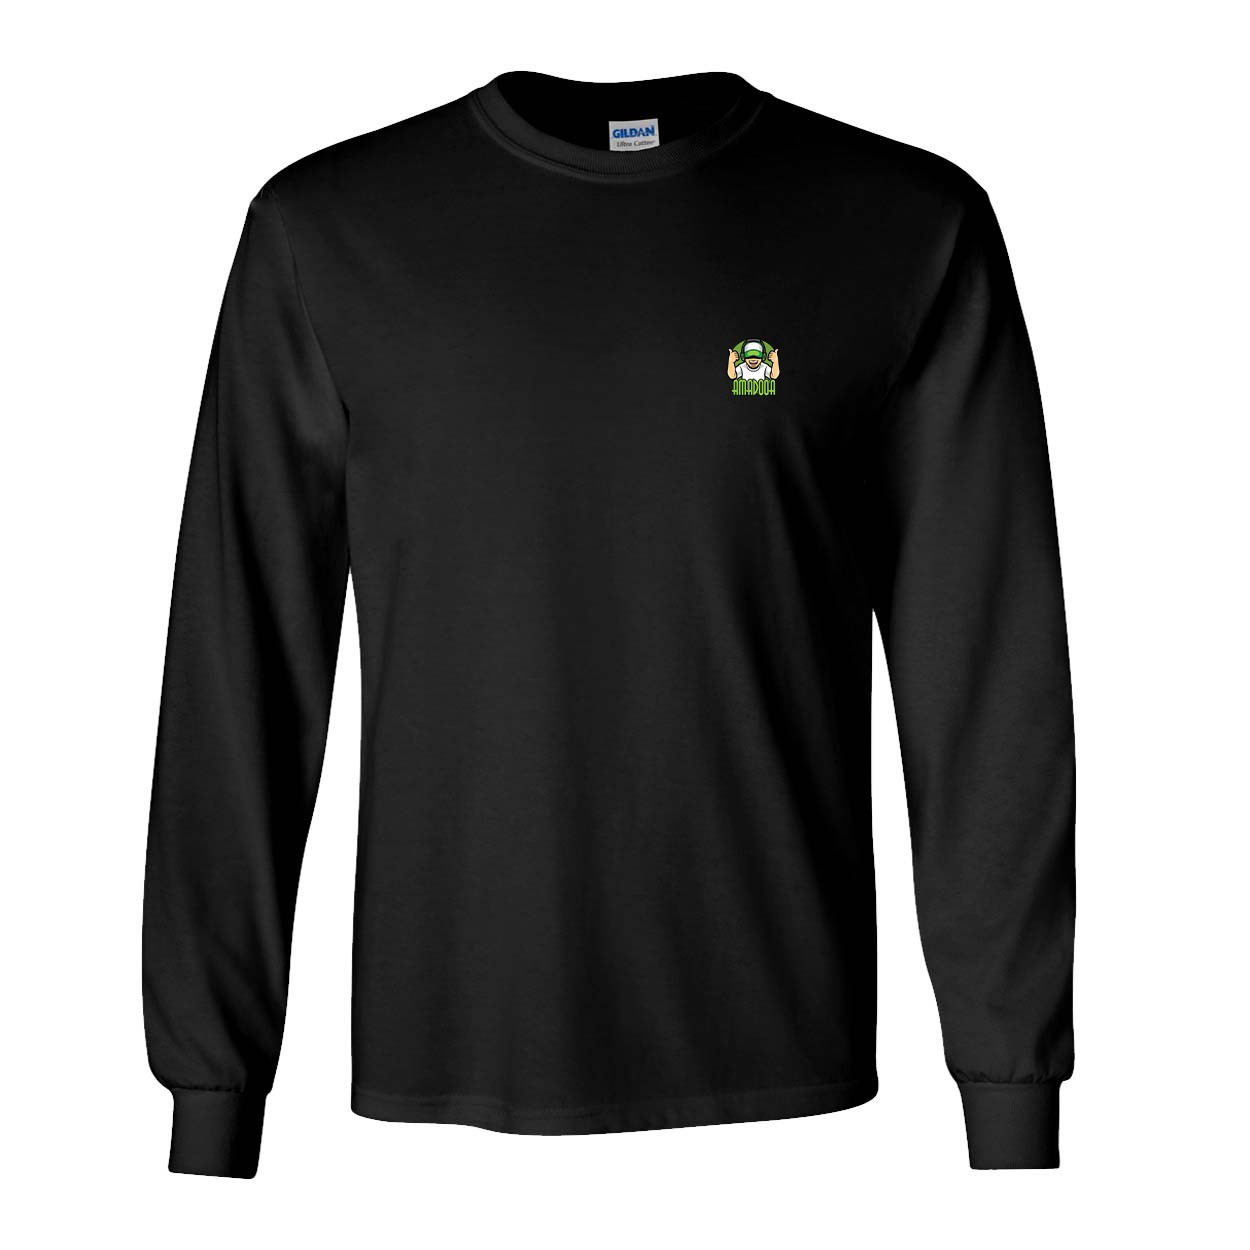 Amadooa Night Out Long Sleeve T-Shirt Black (White Logo)